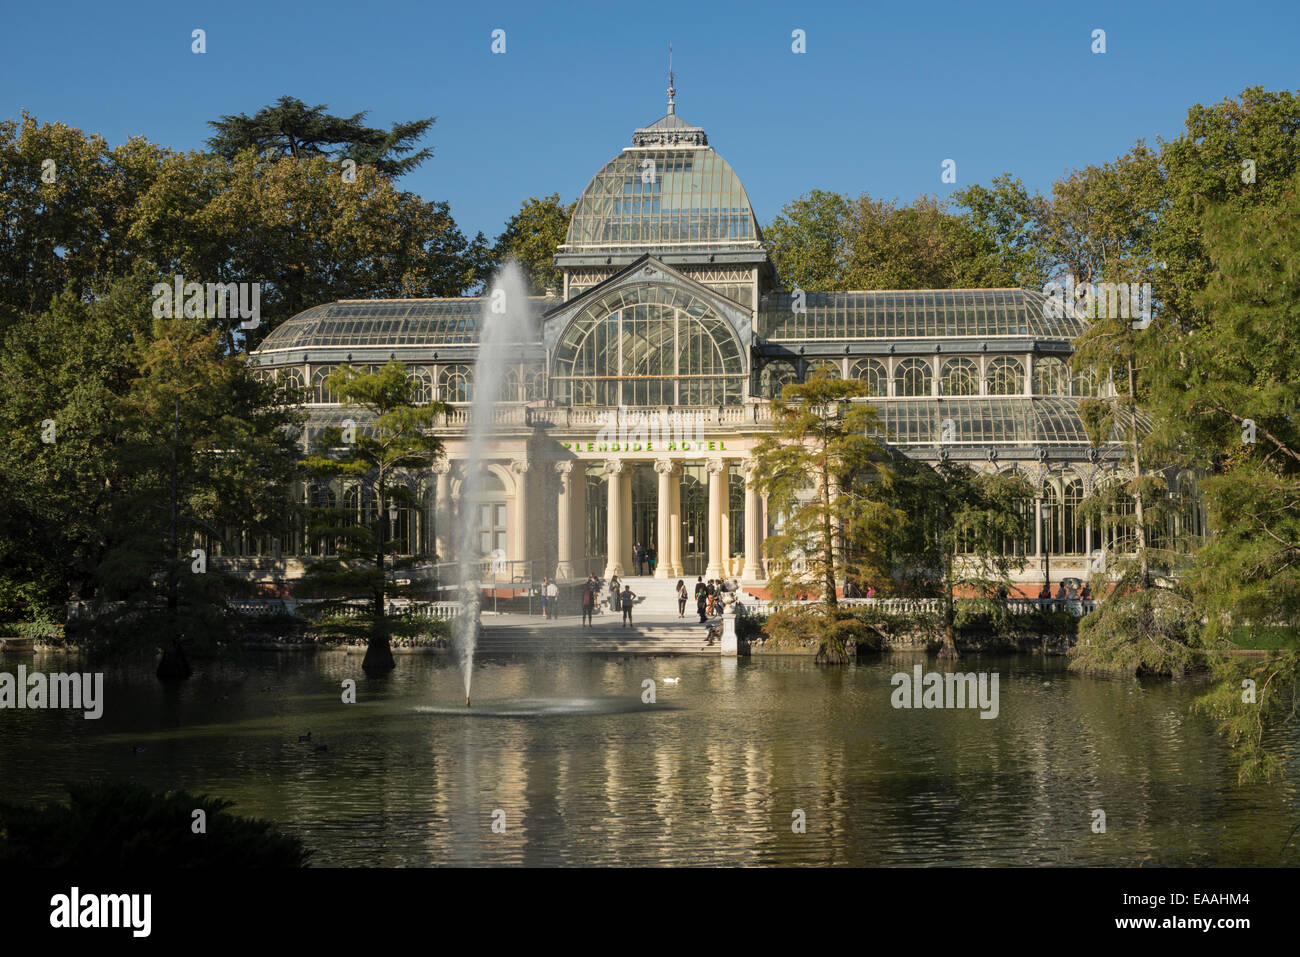 Palacio de Cristal, Retiro Park, Madrid Stock Photo